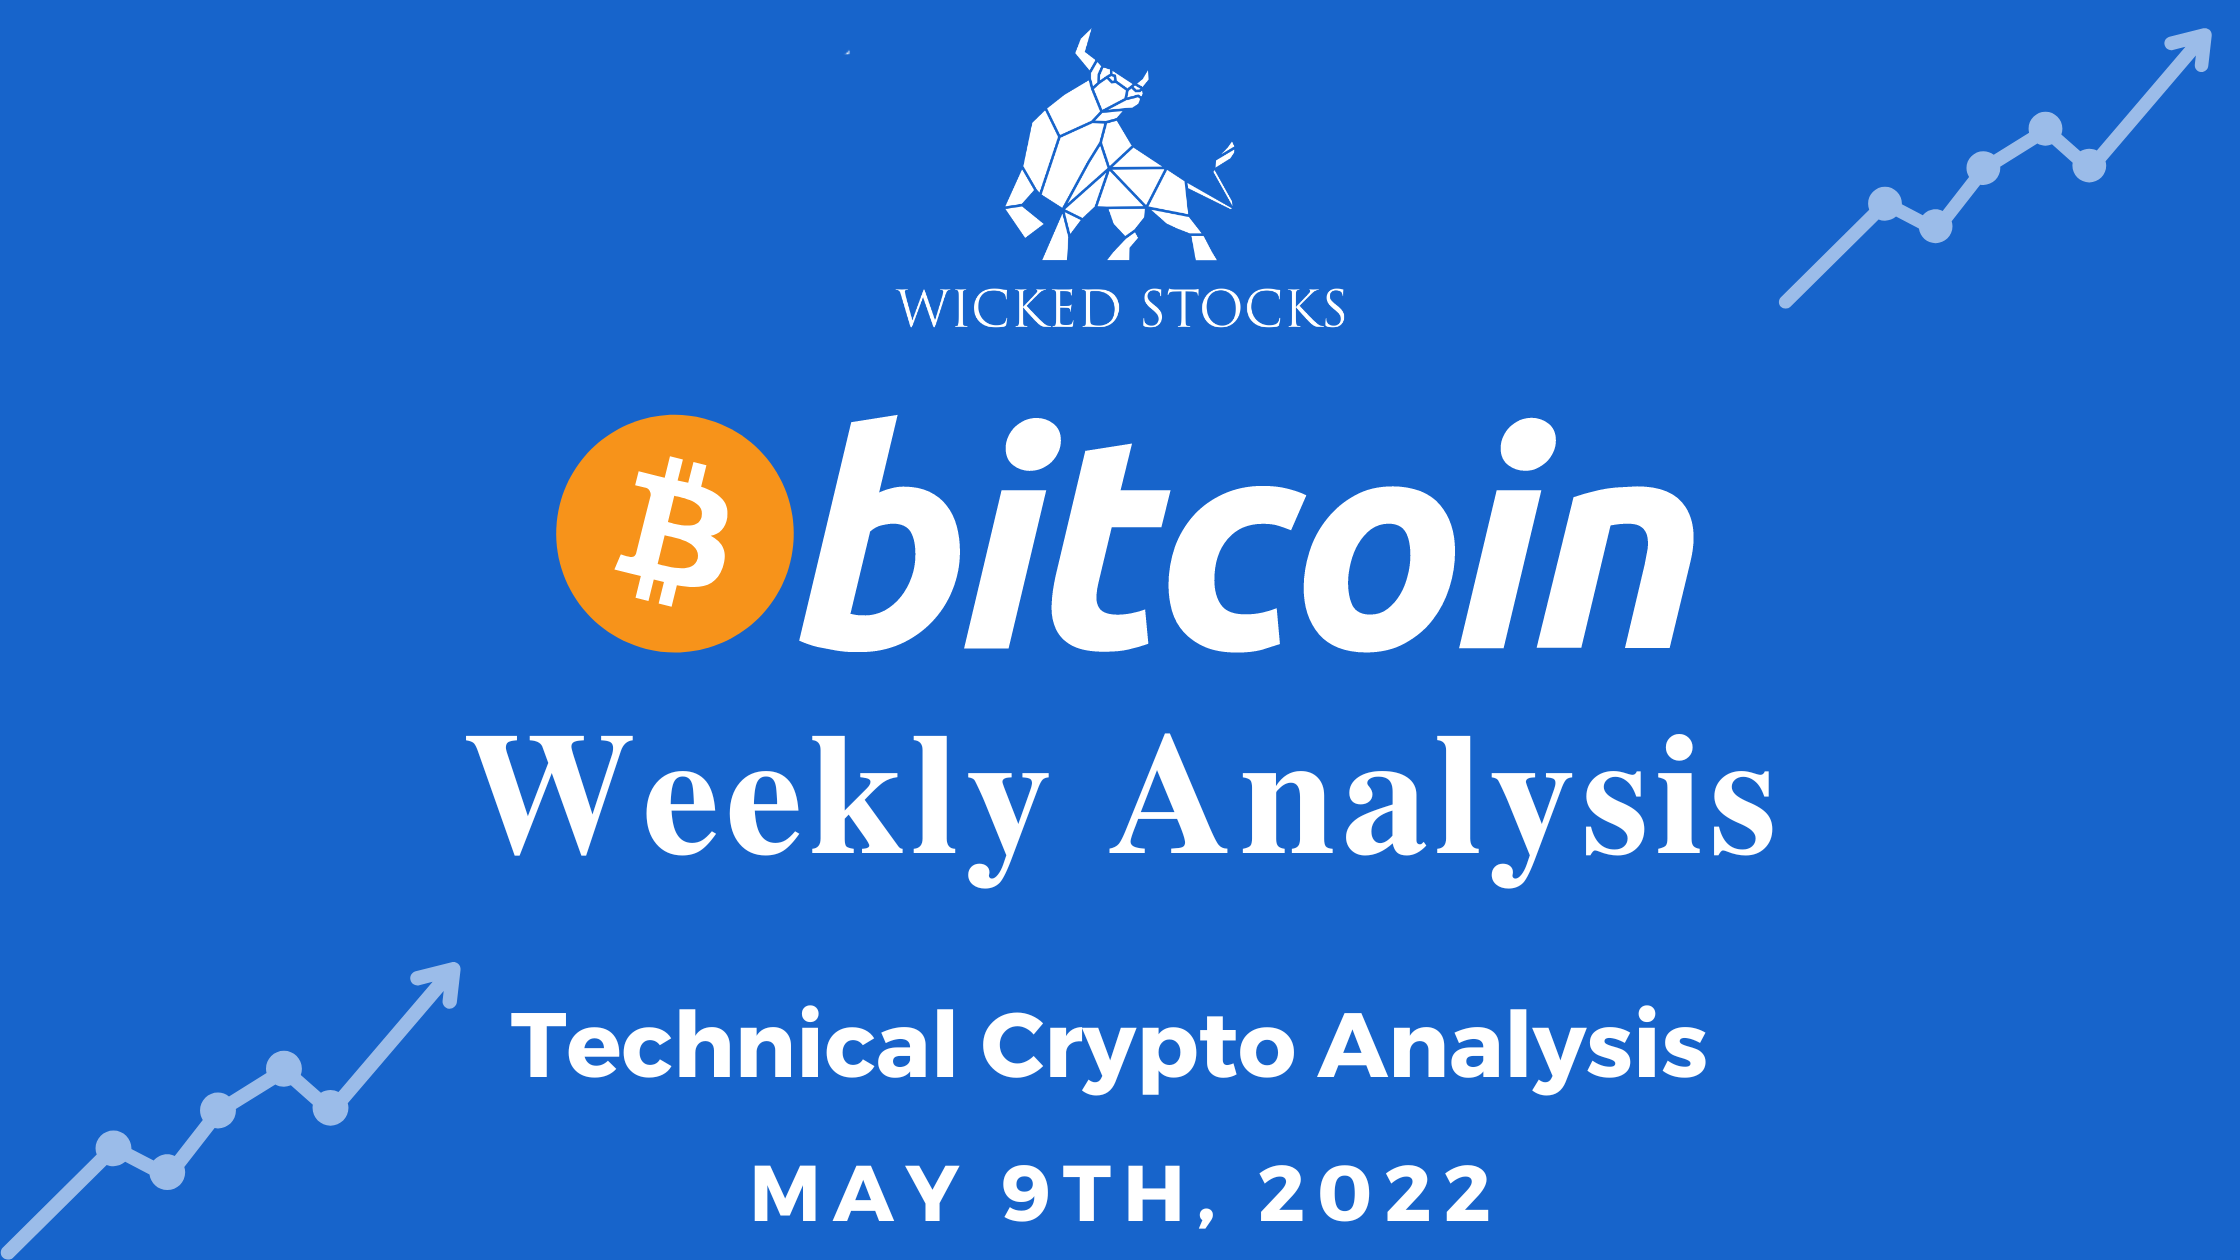 Bitcoin (BTC) Weekly Analysis 5/9/22